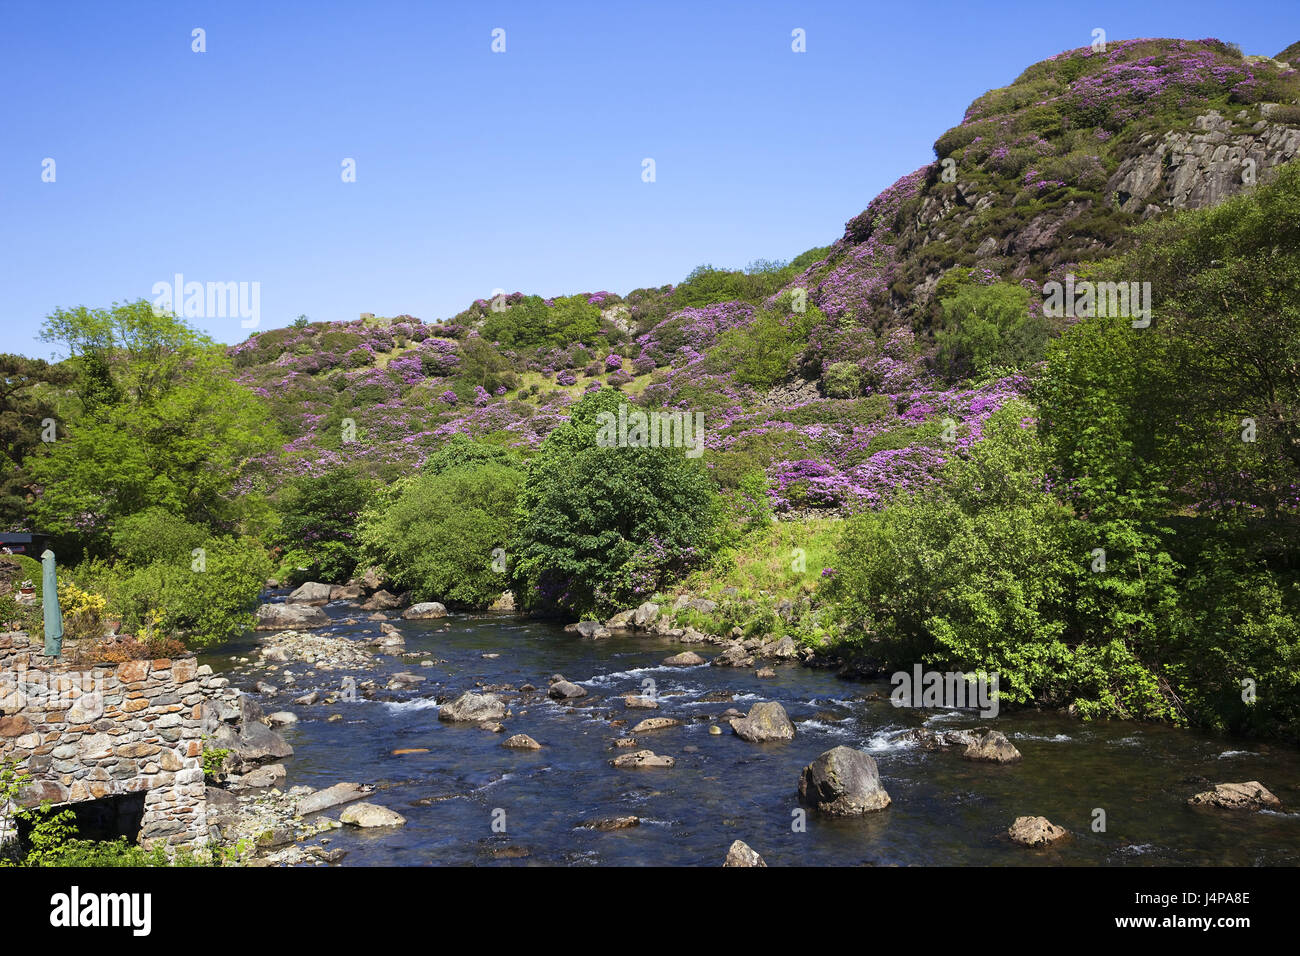 Wales, Gwynedd, Snowdonia national park, scenery, river, rhododendron, Stock Photo